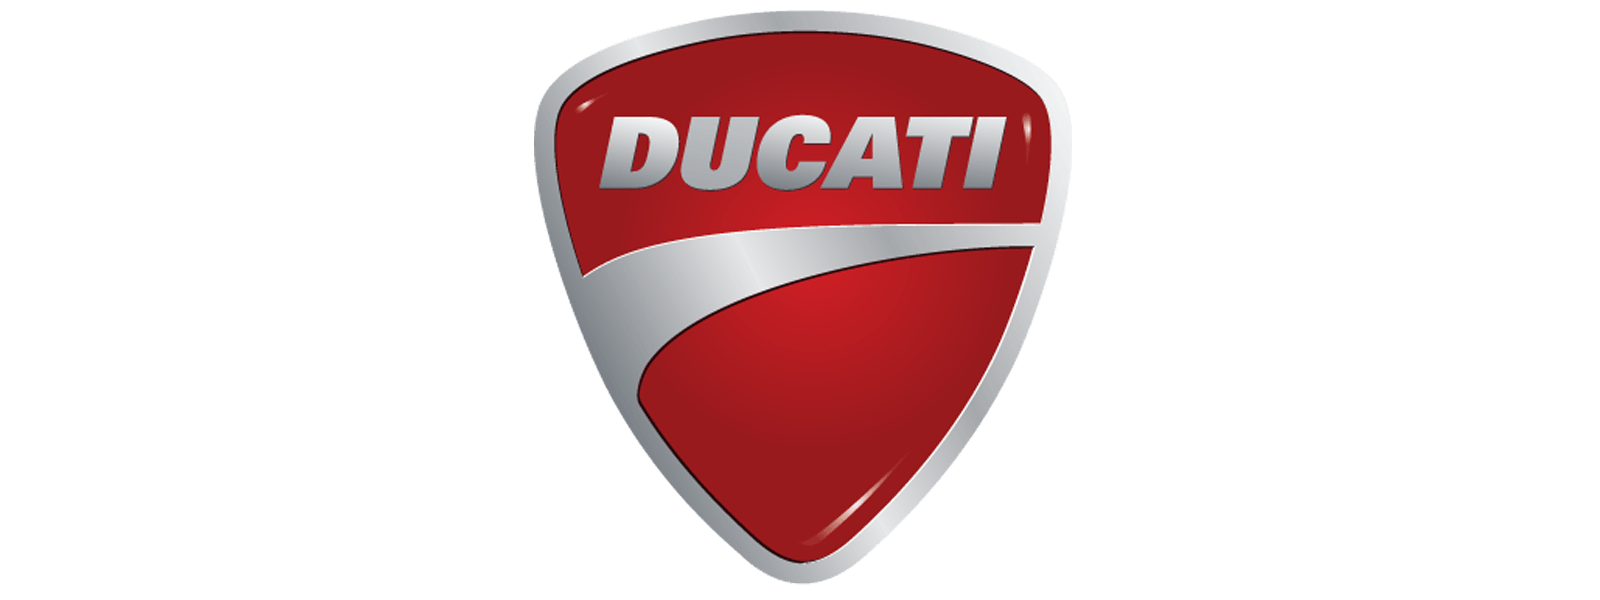 Ducati Logo - Ducati Logo. Motorcycle brands: logo, specs, history